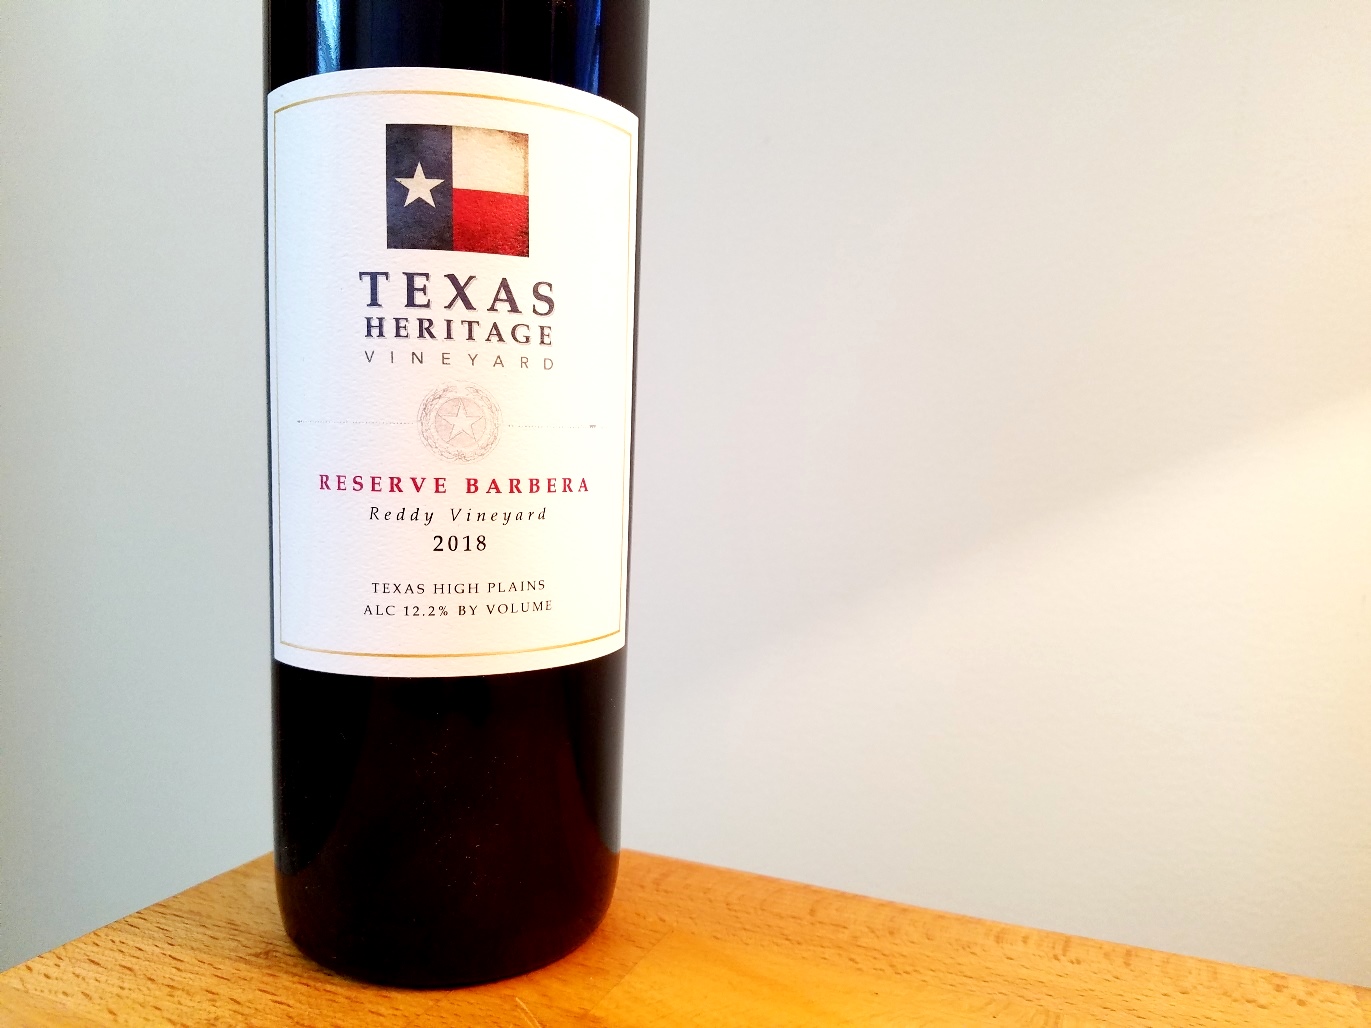 Texas Heritage Vineyard, Reserve Barbera 2018, Reddy Vineyard, Texas High Plains, Texas, Wine Casual